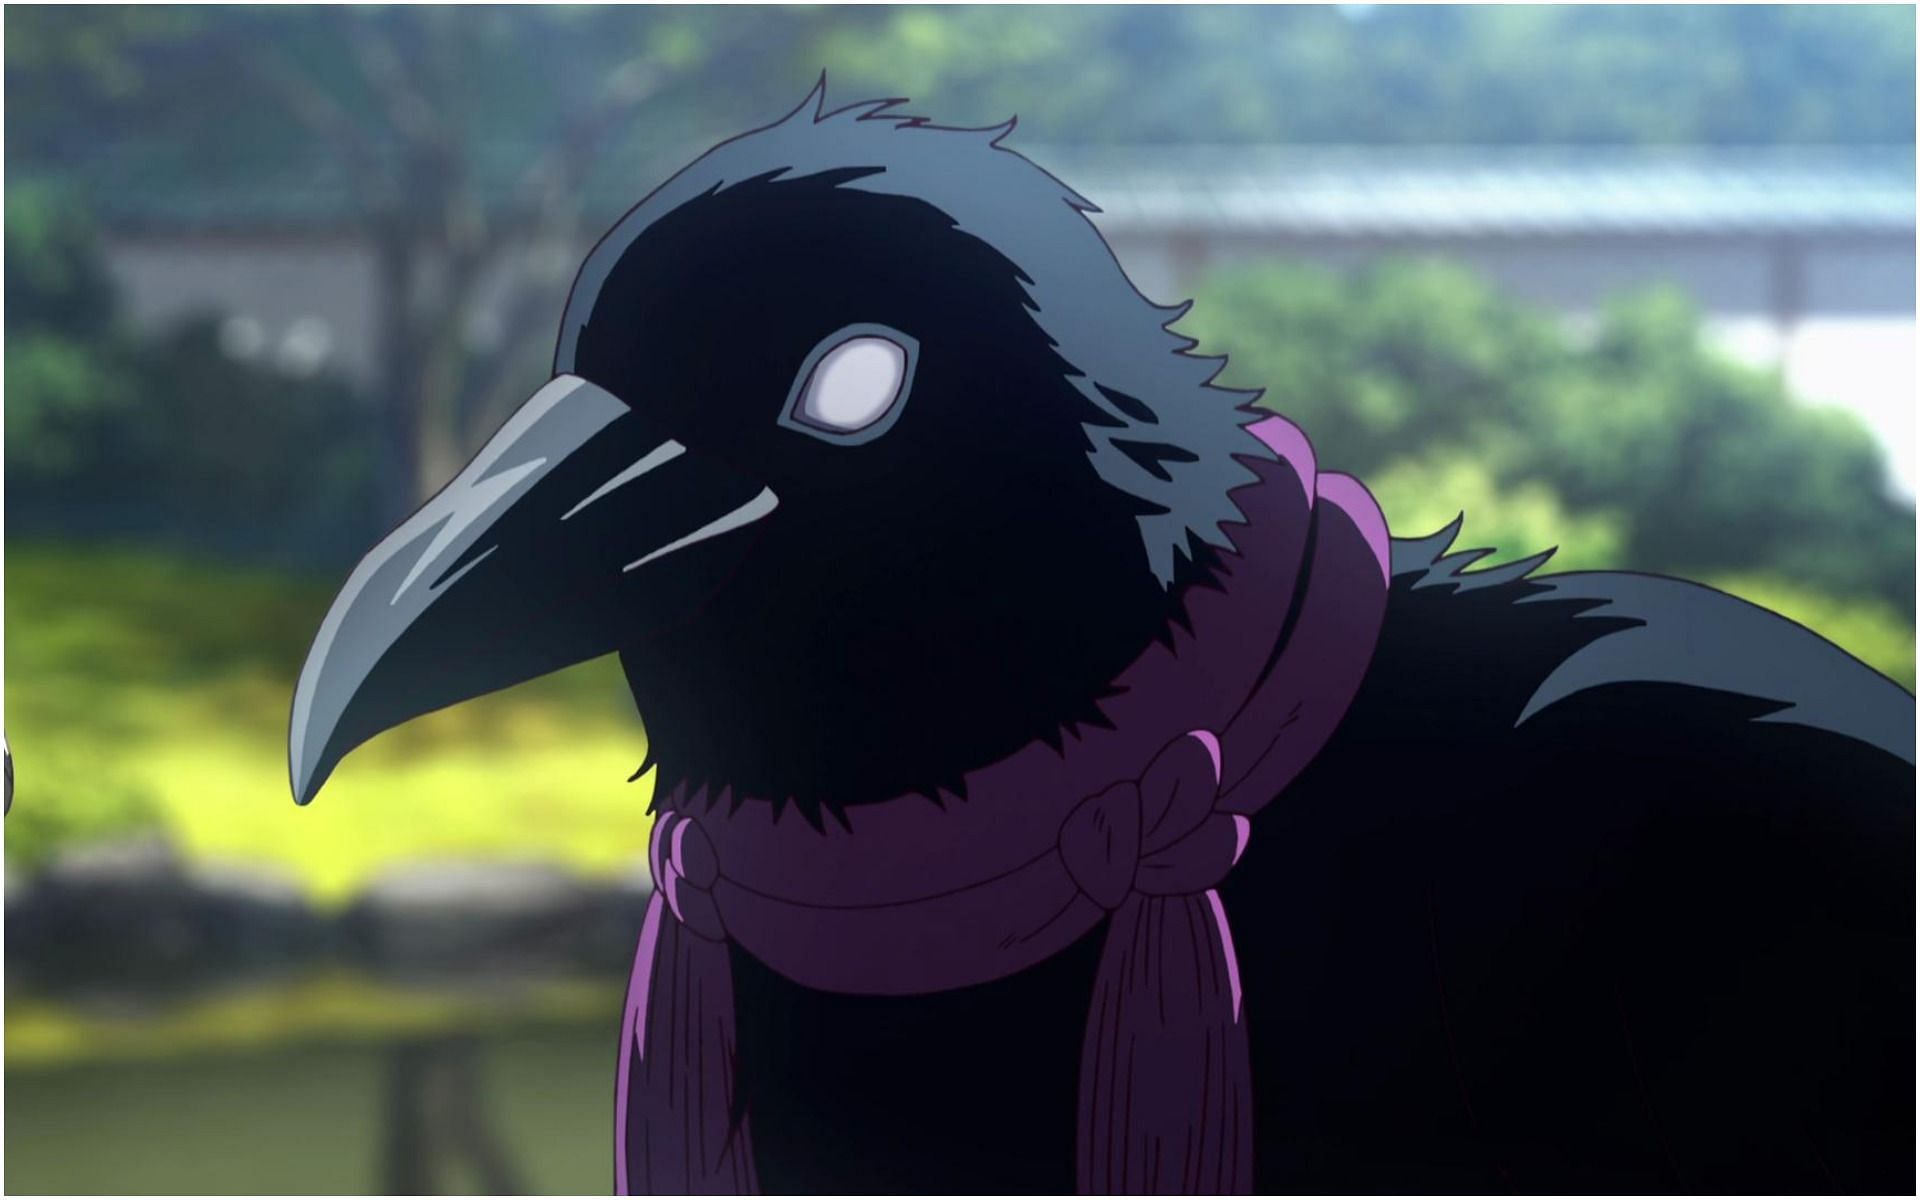 About Kasugai Crows in Demon Slayer (image via Ufotable)